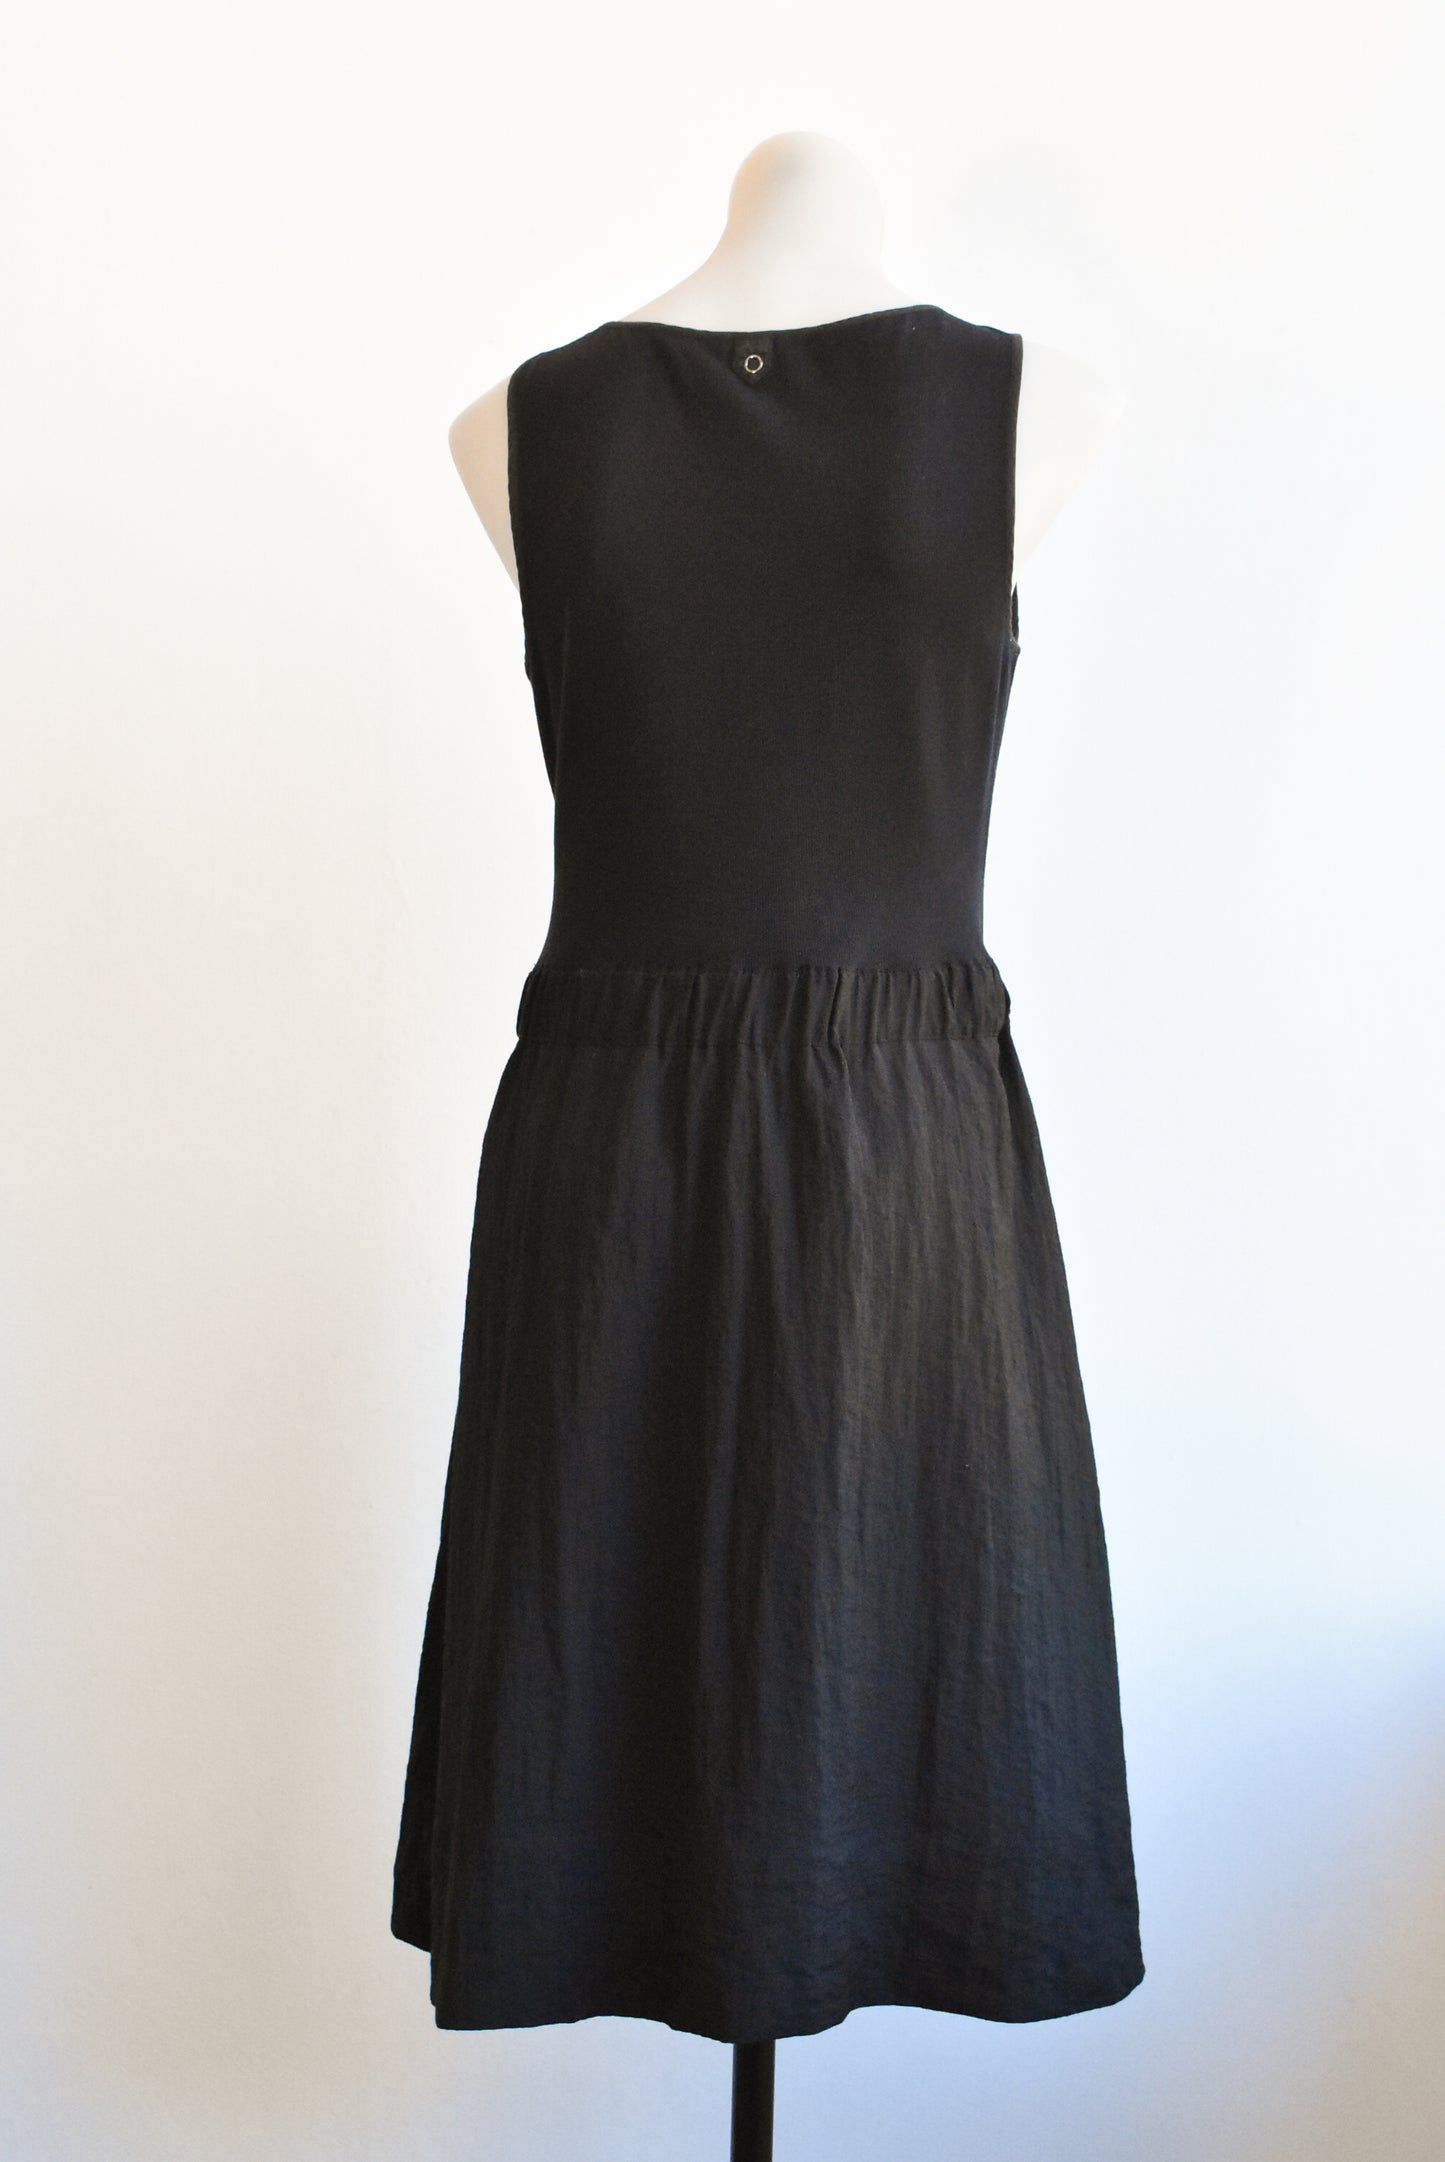 Jacqui-e sleeveless black dress with front pockets, size 12